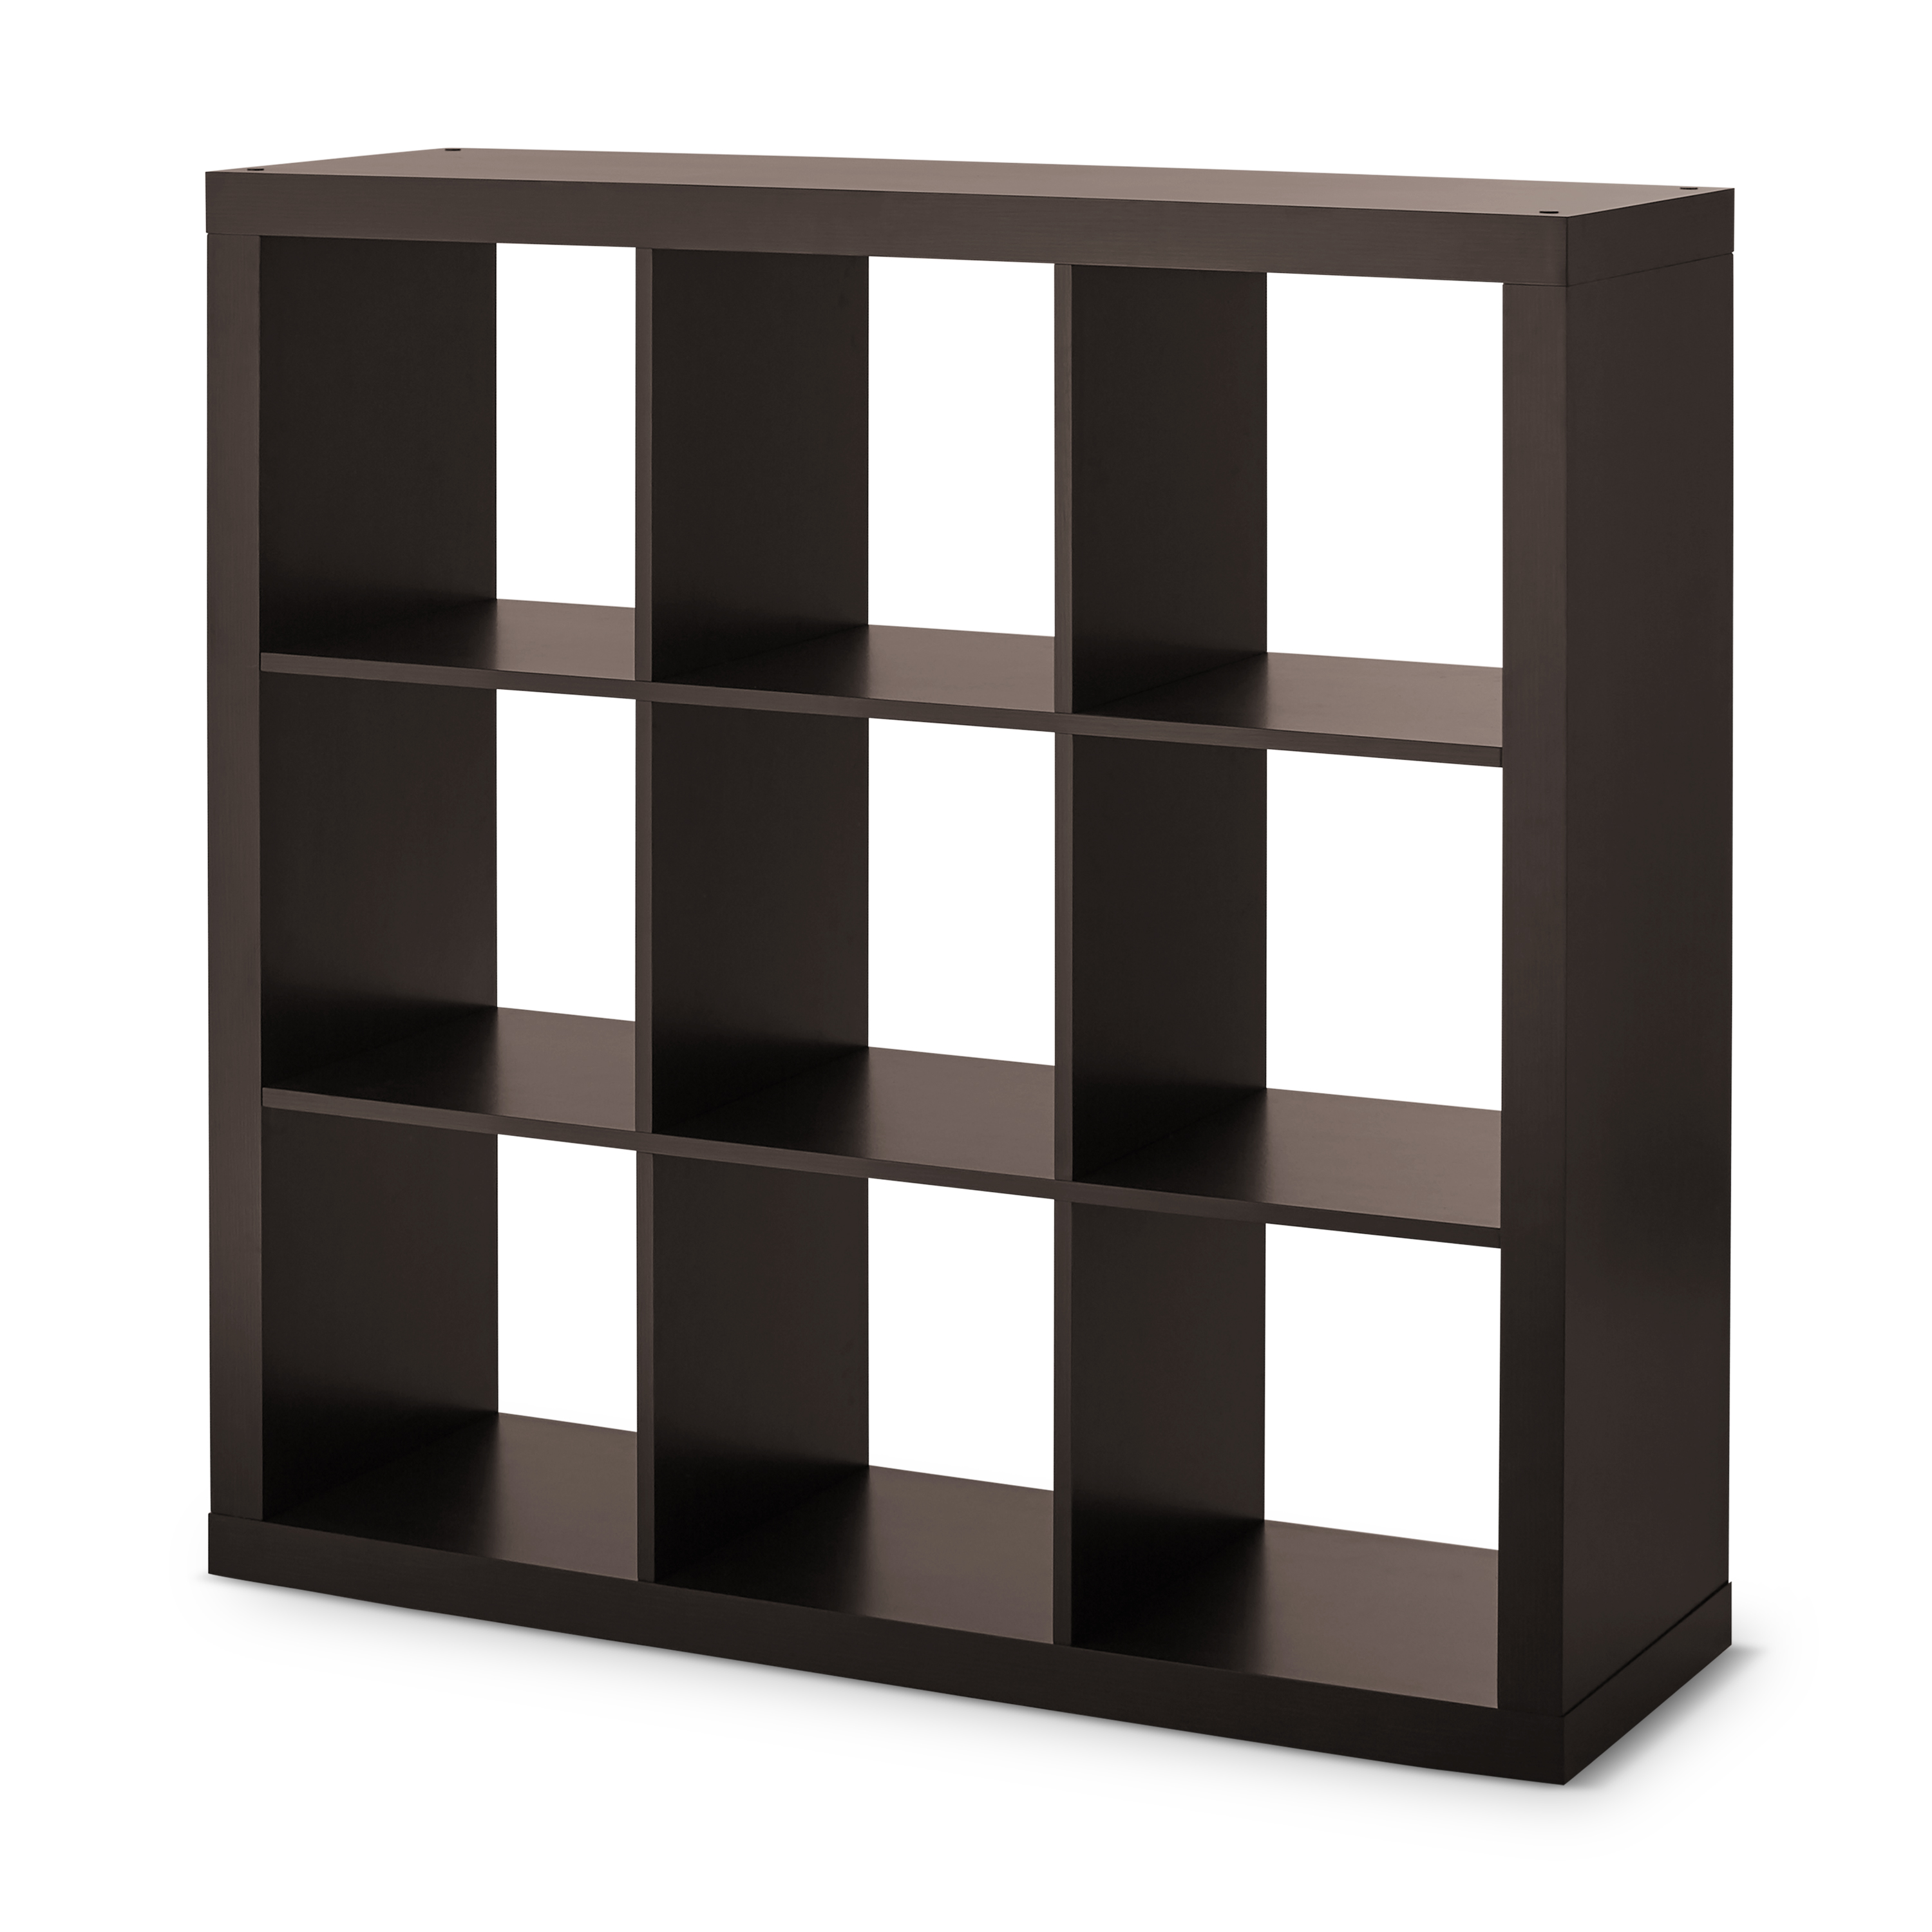 Better Homes & Gardens 9-Cube Storage Organizer, Espresso - image 1 of 6